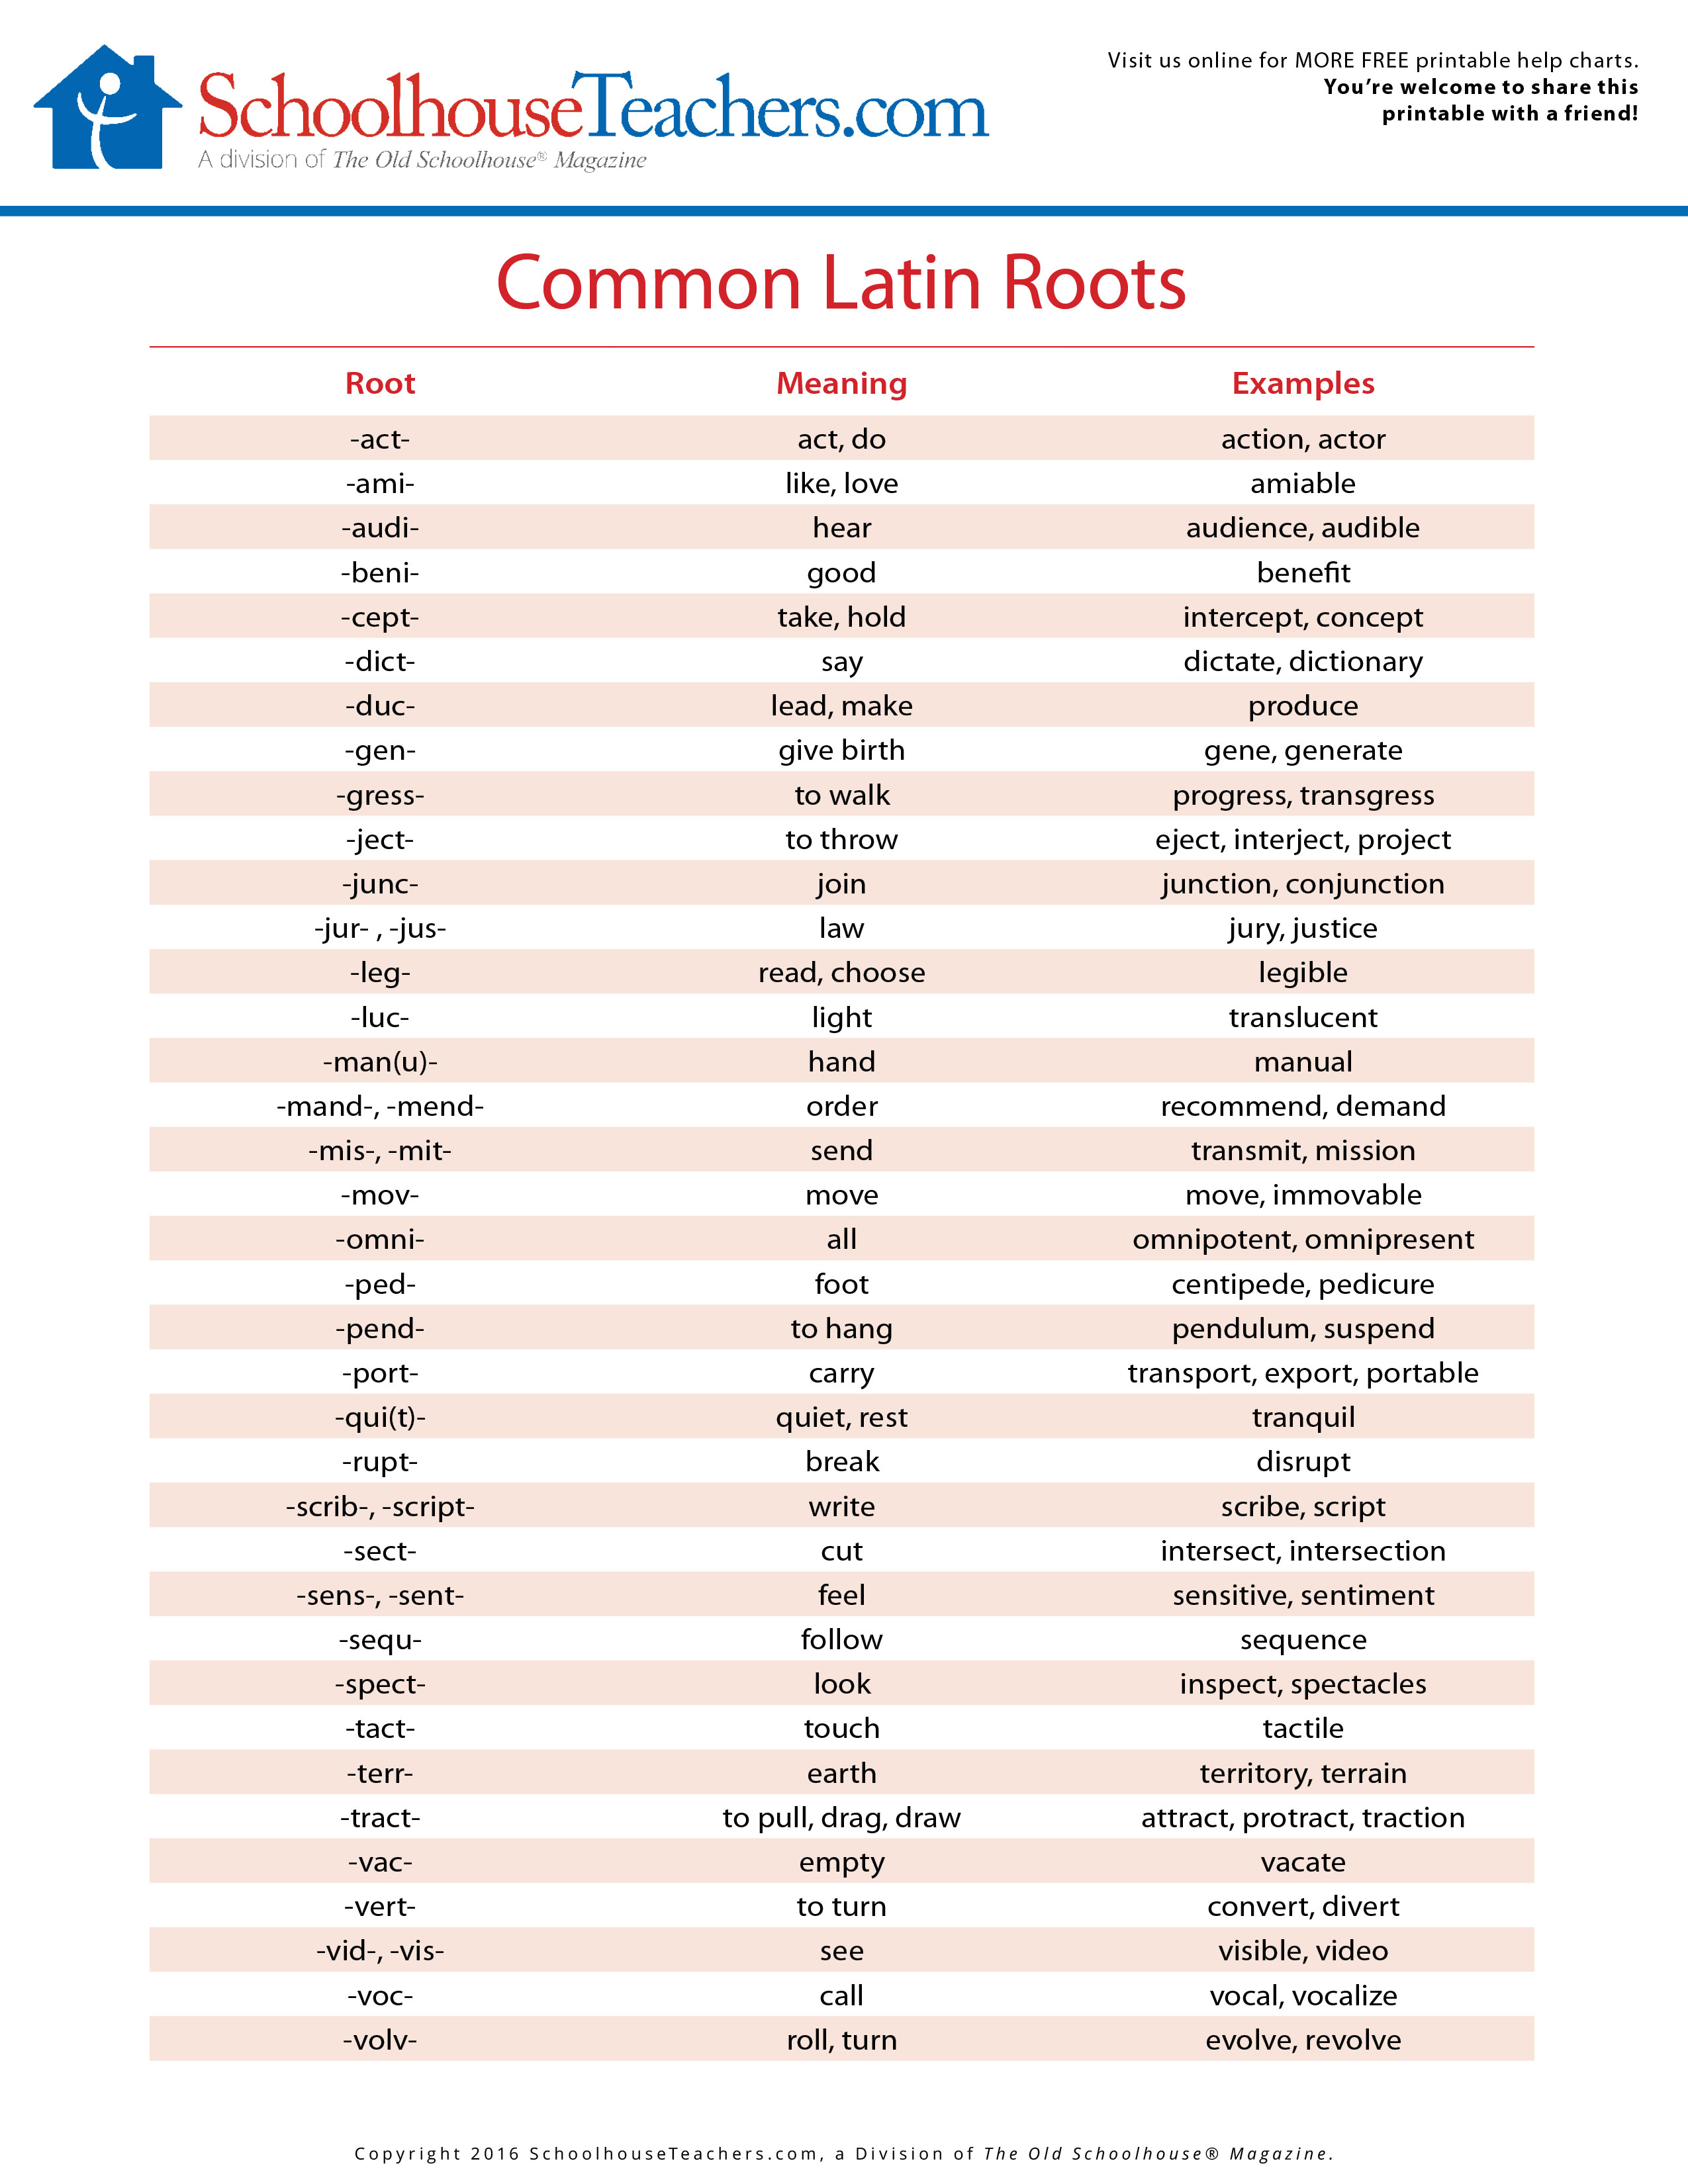 ST Common Latin Roots 1